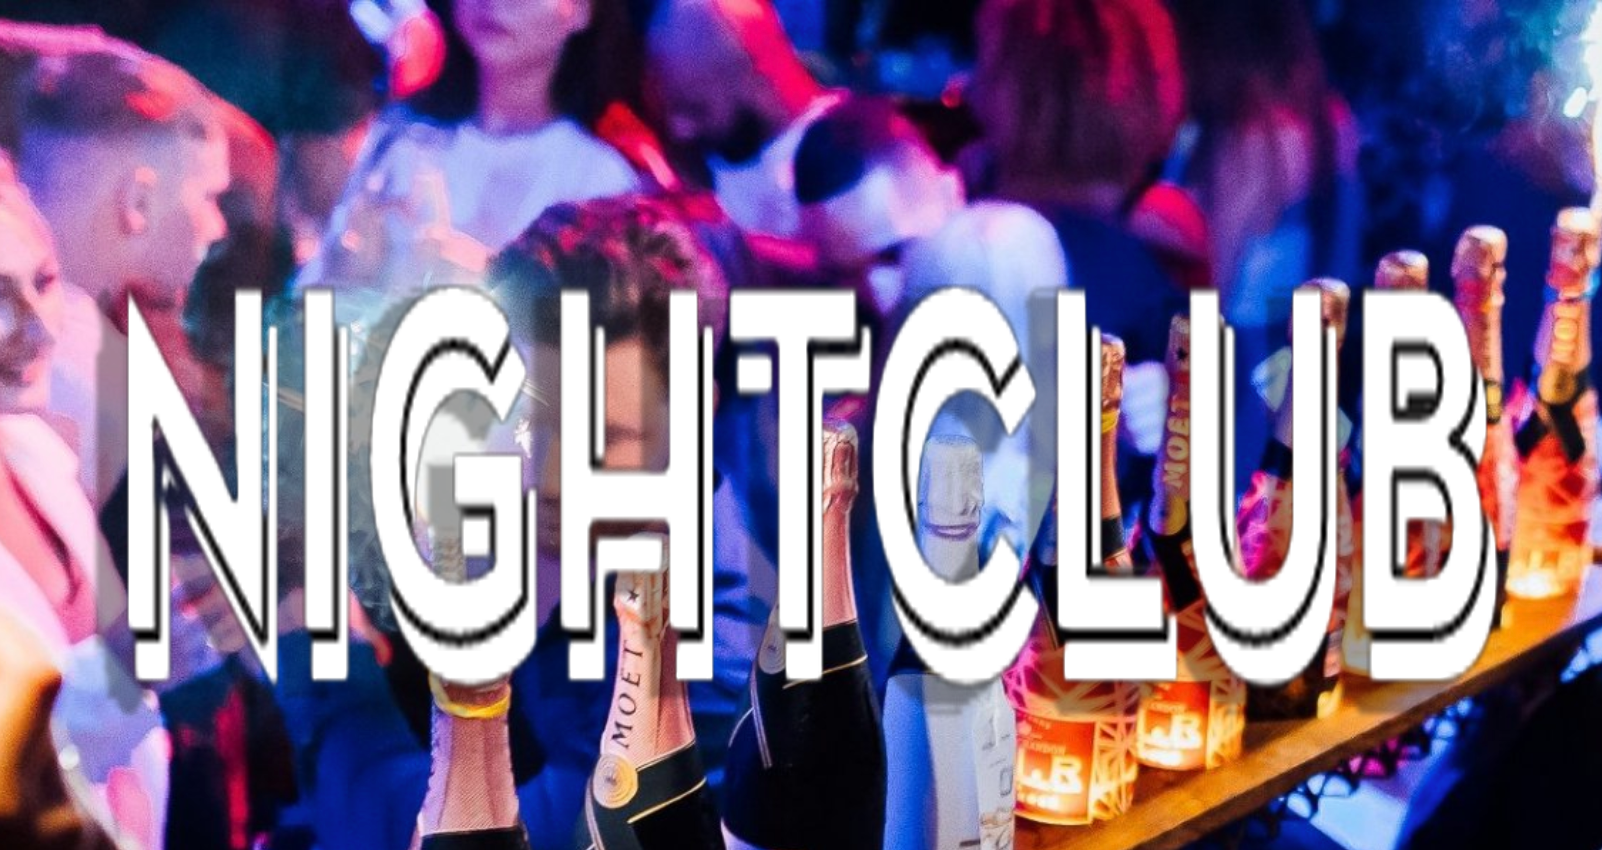 Nightclub City Rotterdam